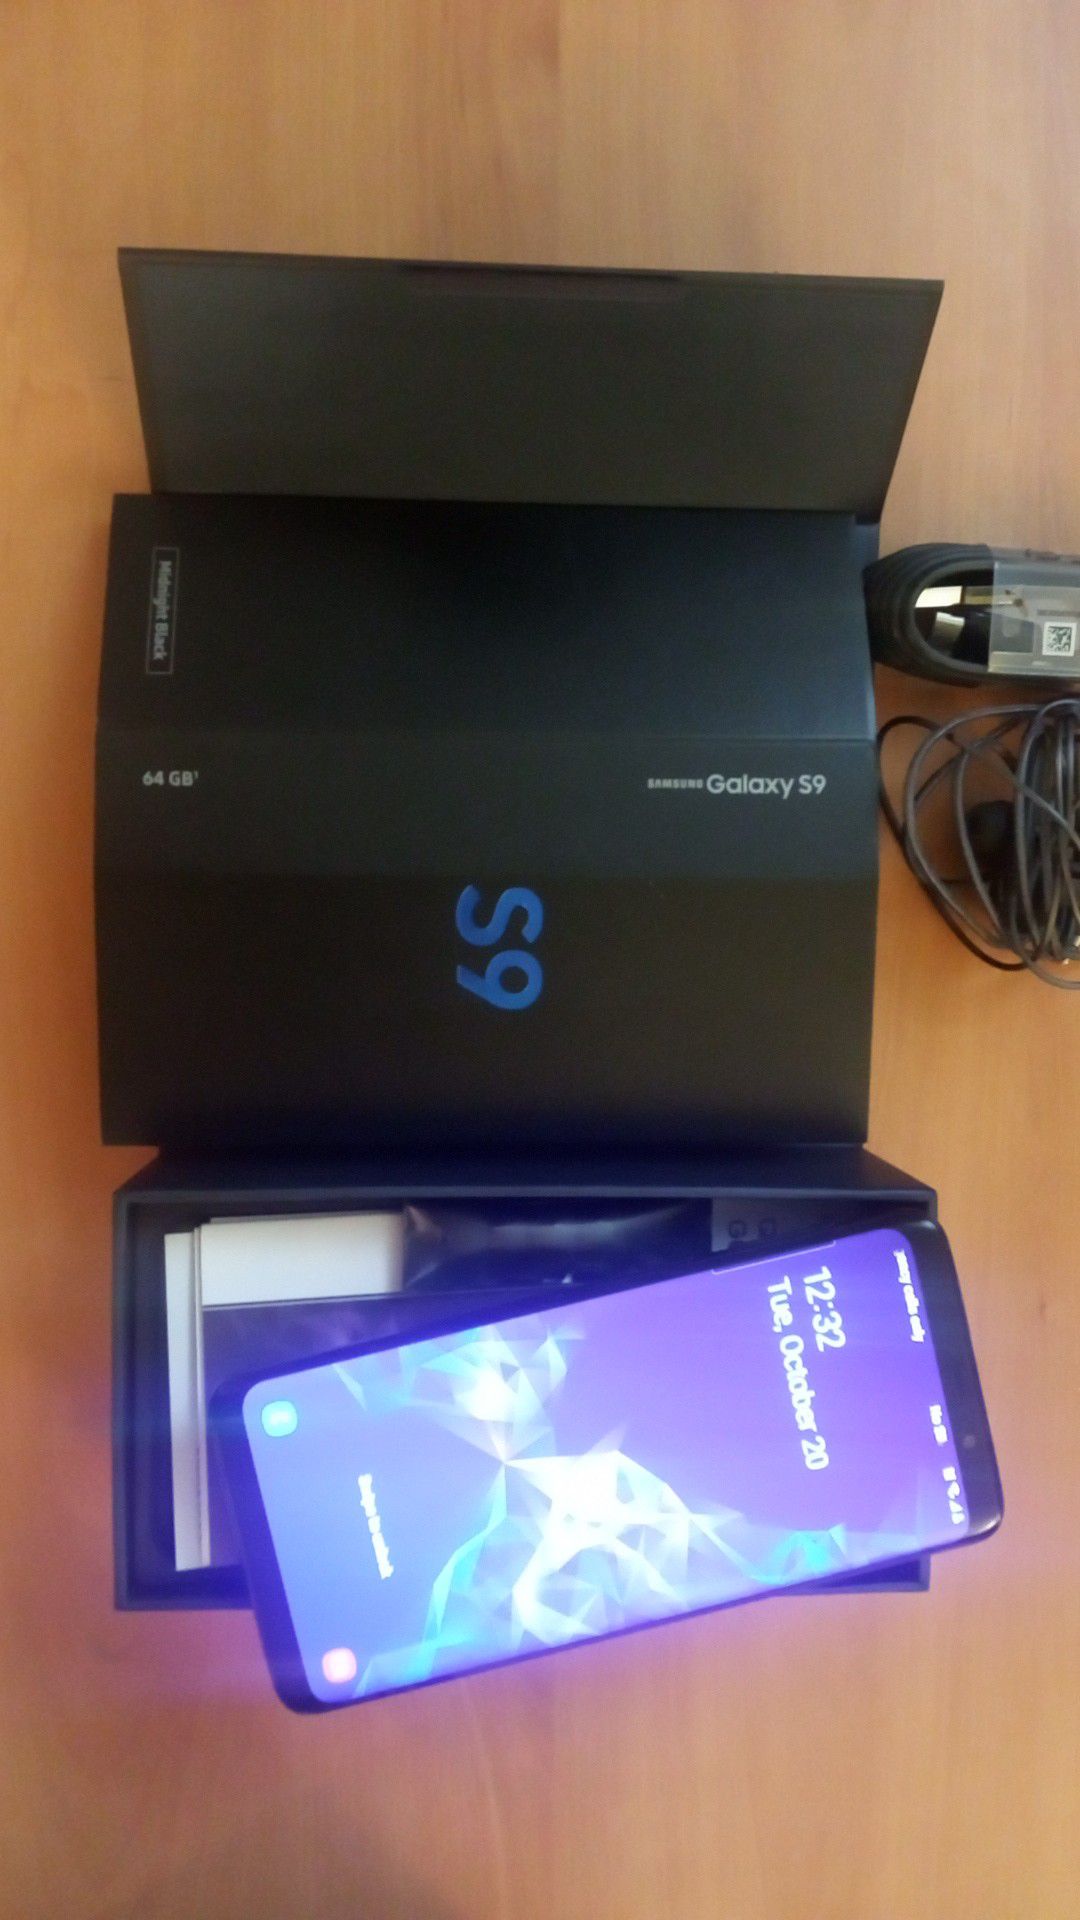 Samsung Galaxy 9 with box